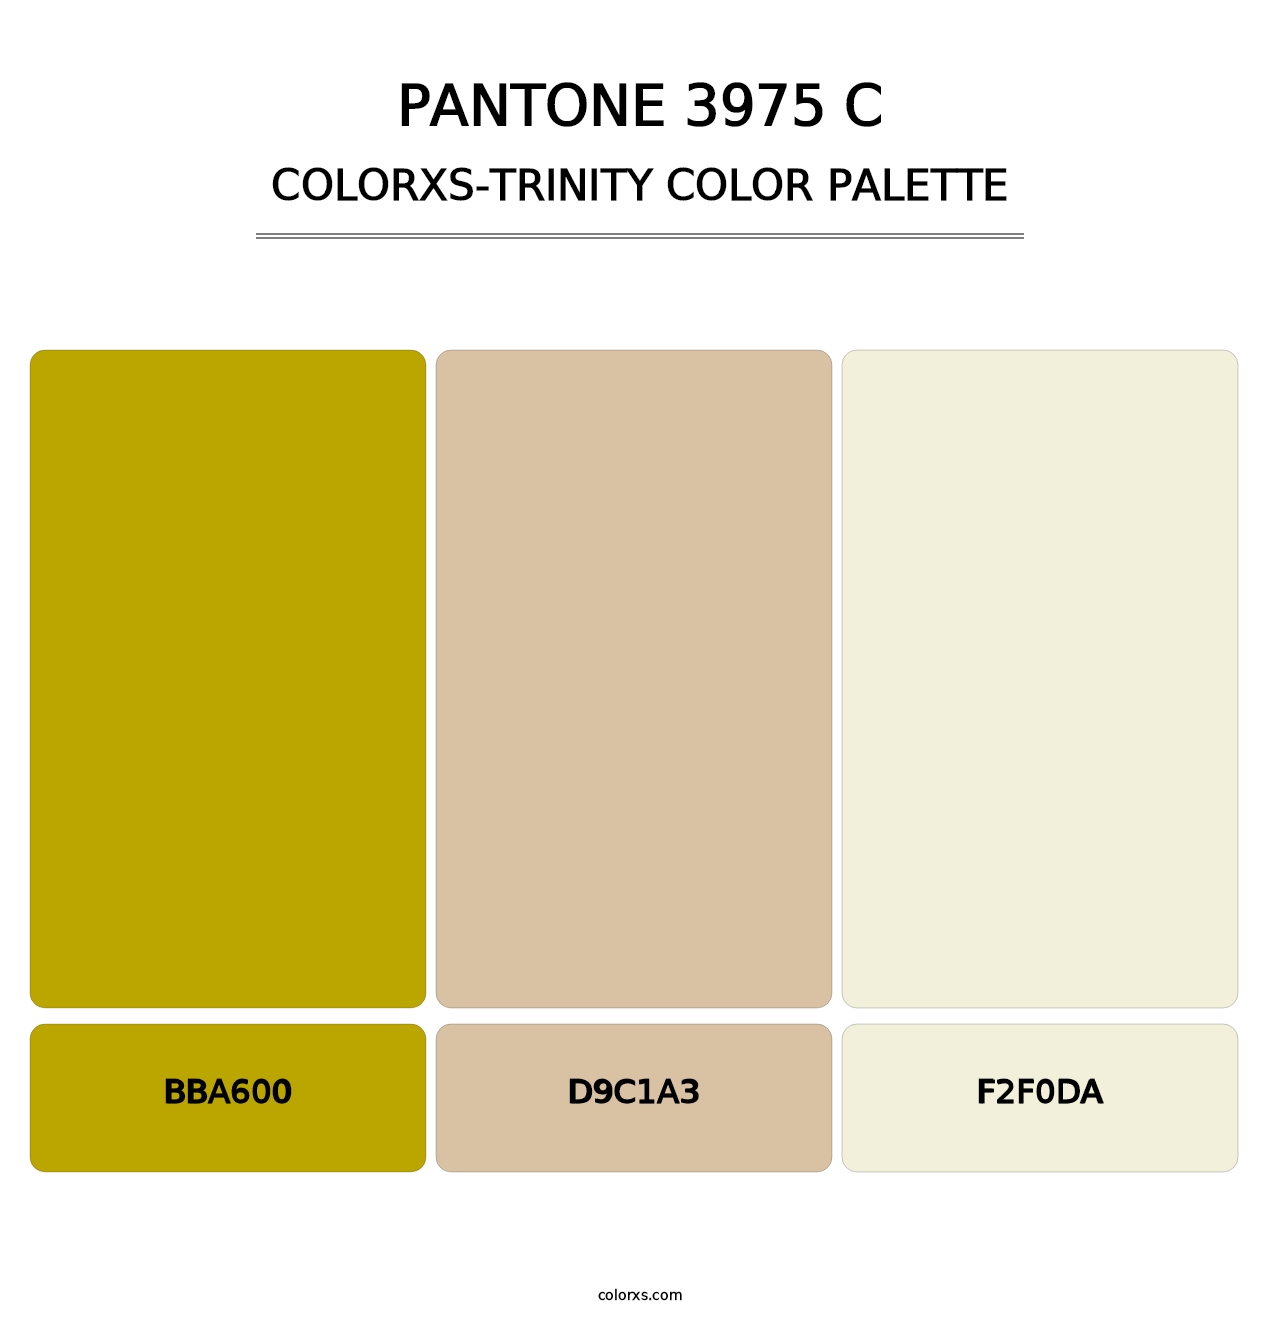 PANTONE 3975 C - Colorxs Trinity Palette